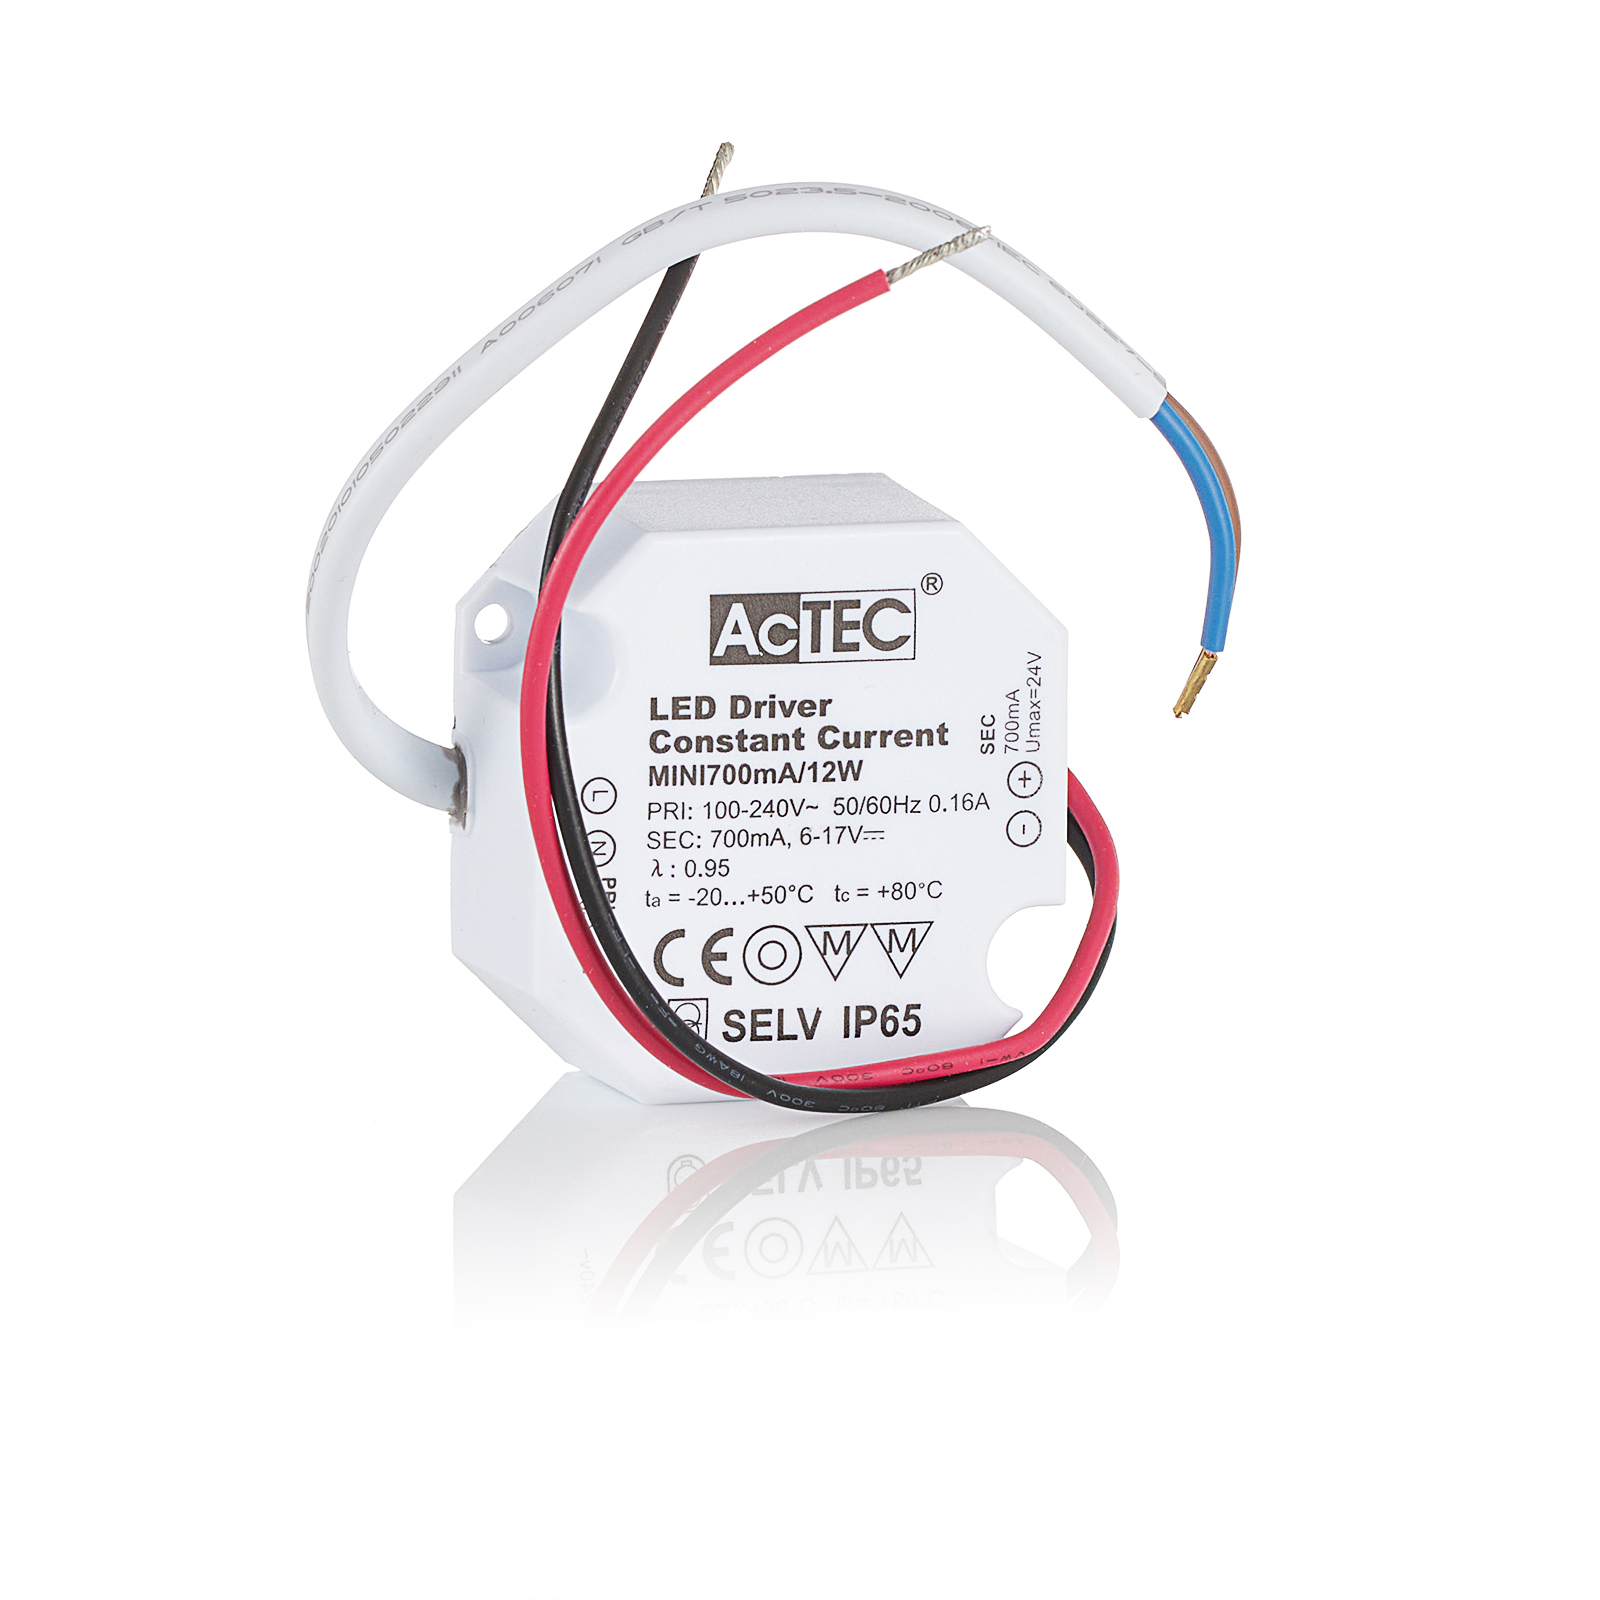 AcTEC Mini LED-drivare CC 700mA, 12W, IP65